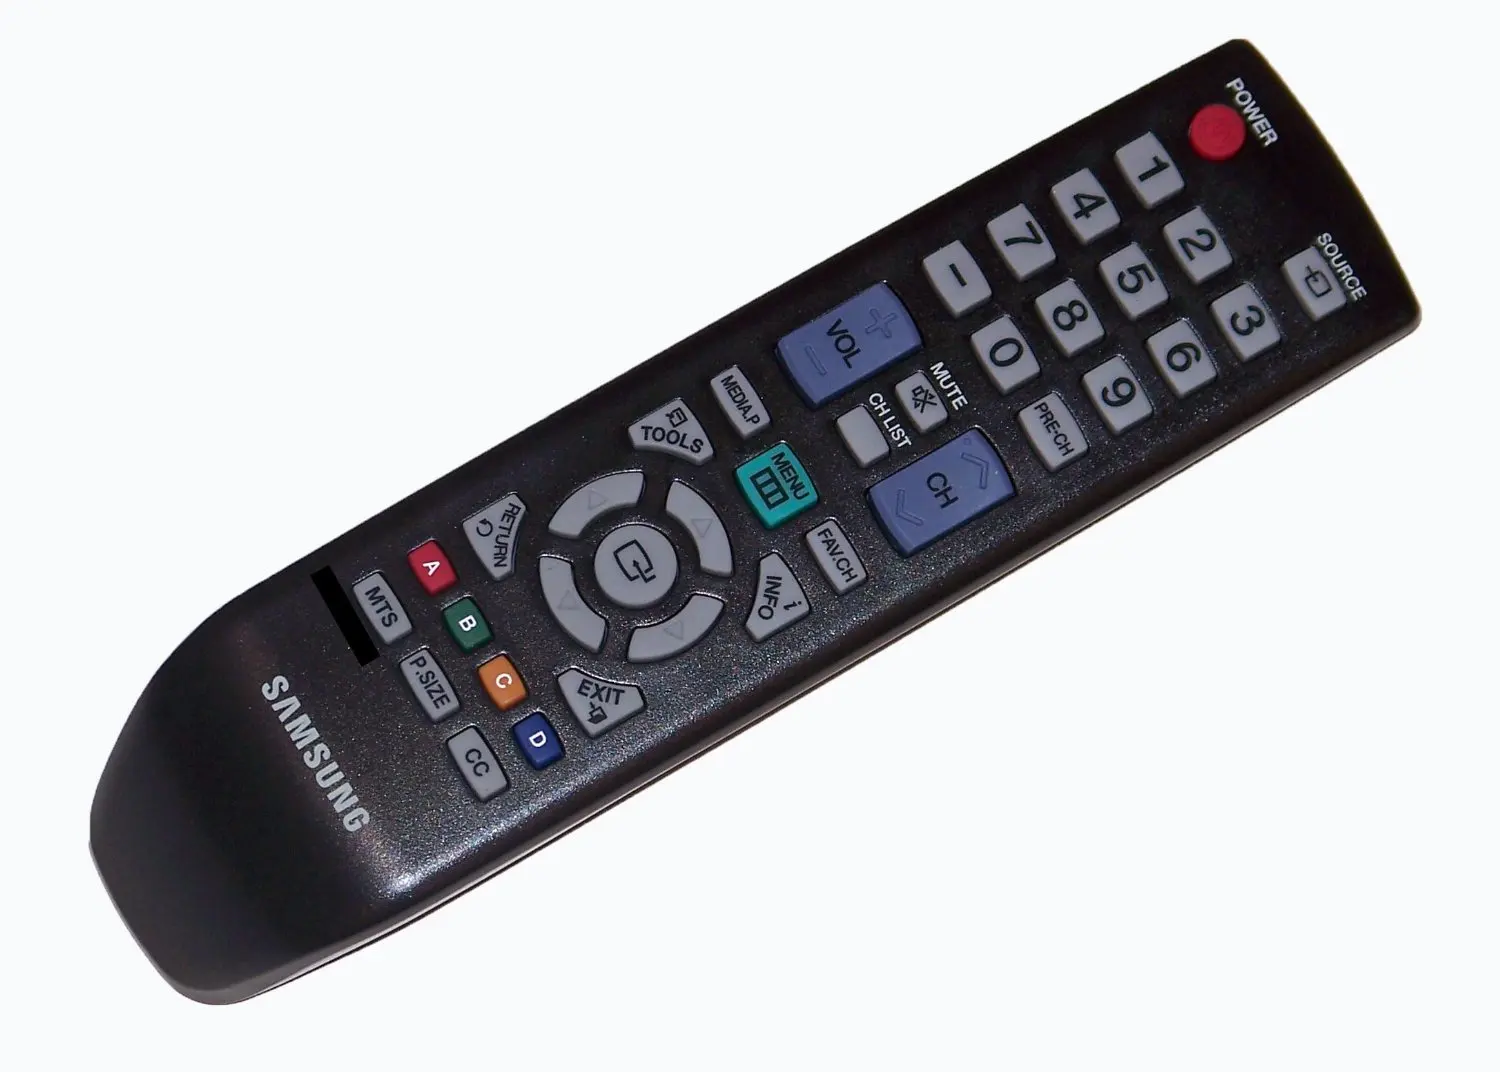 Samsung Remote. Samsung Remote Control. 43m5572 пульт. Samsung TV Remote Control. Пульт самсунг samsung